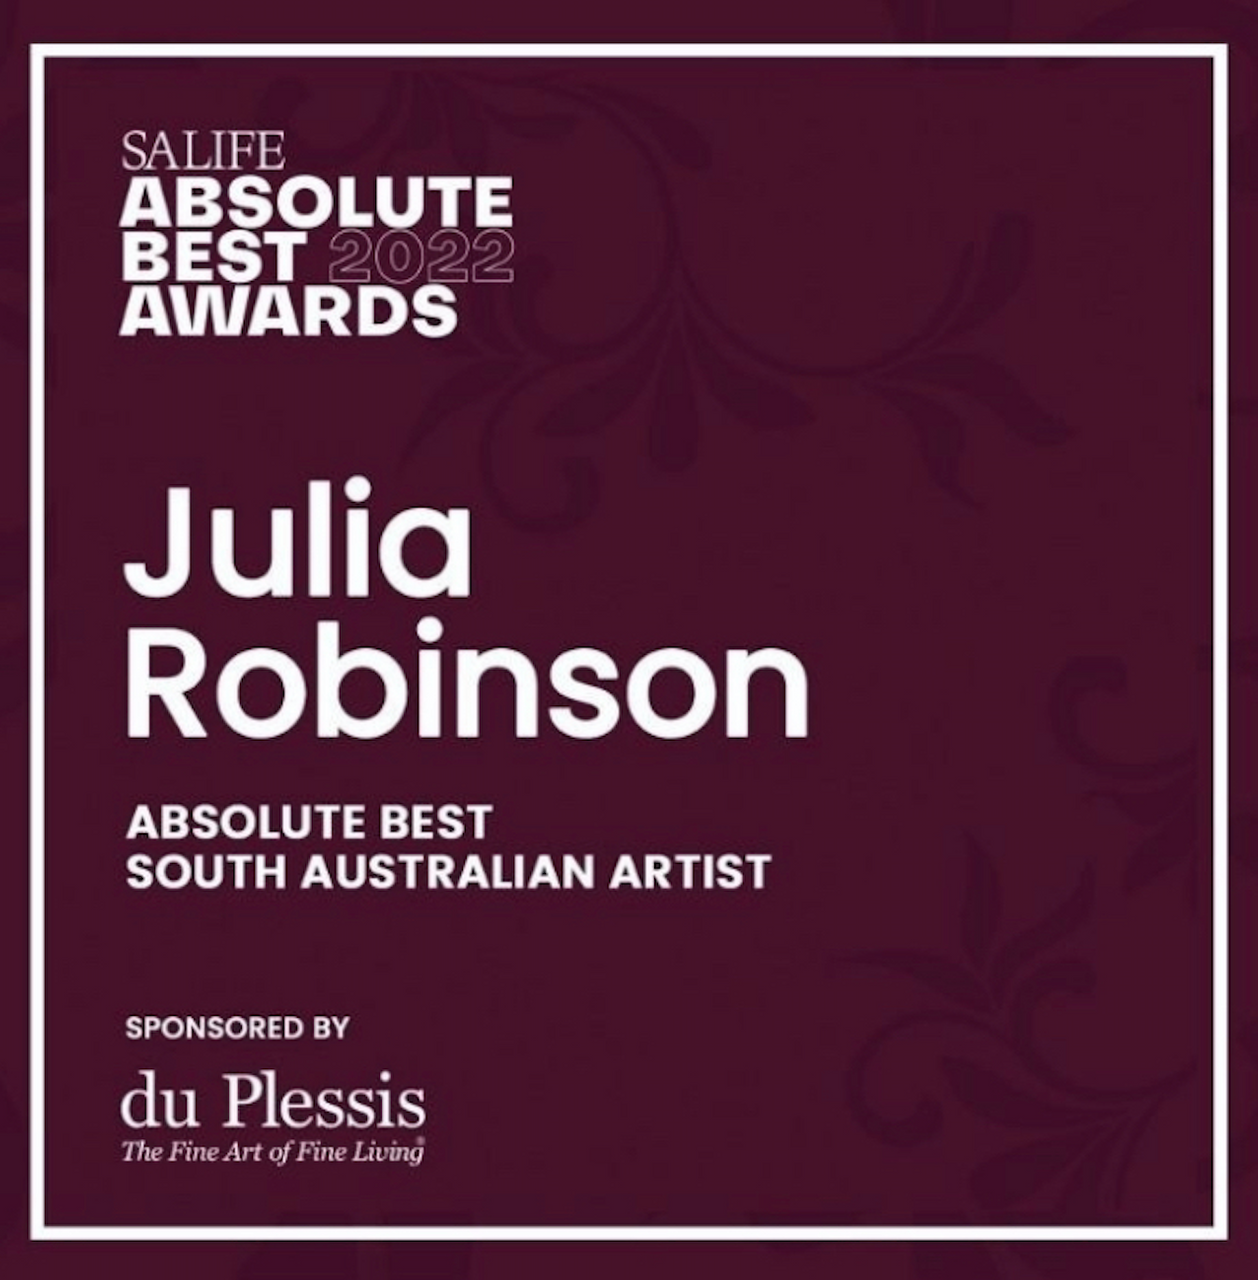 Julia Robinson announced as winner of the 'Absolute Best South Australian Artist Award' for SA Life